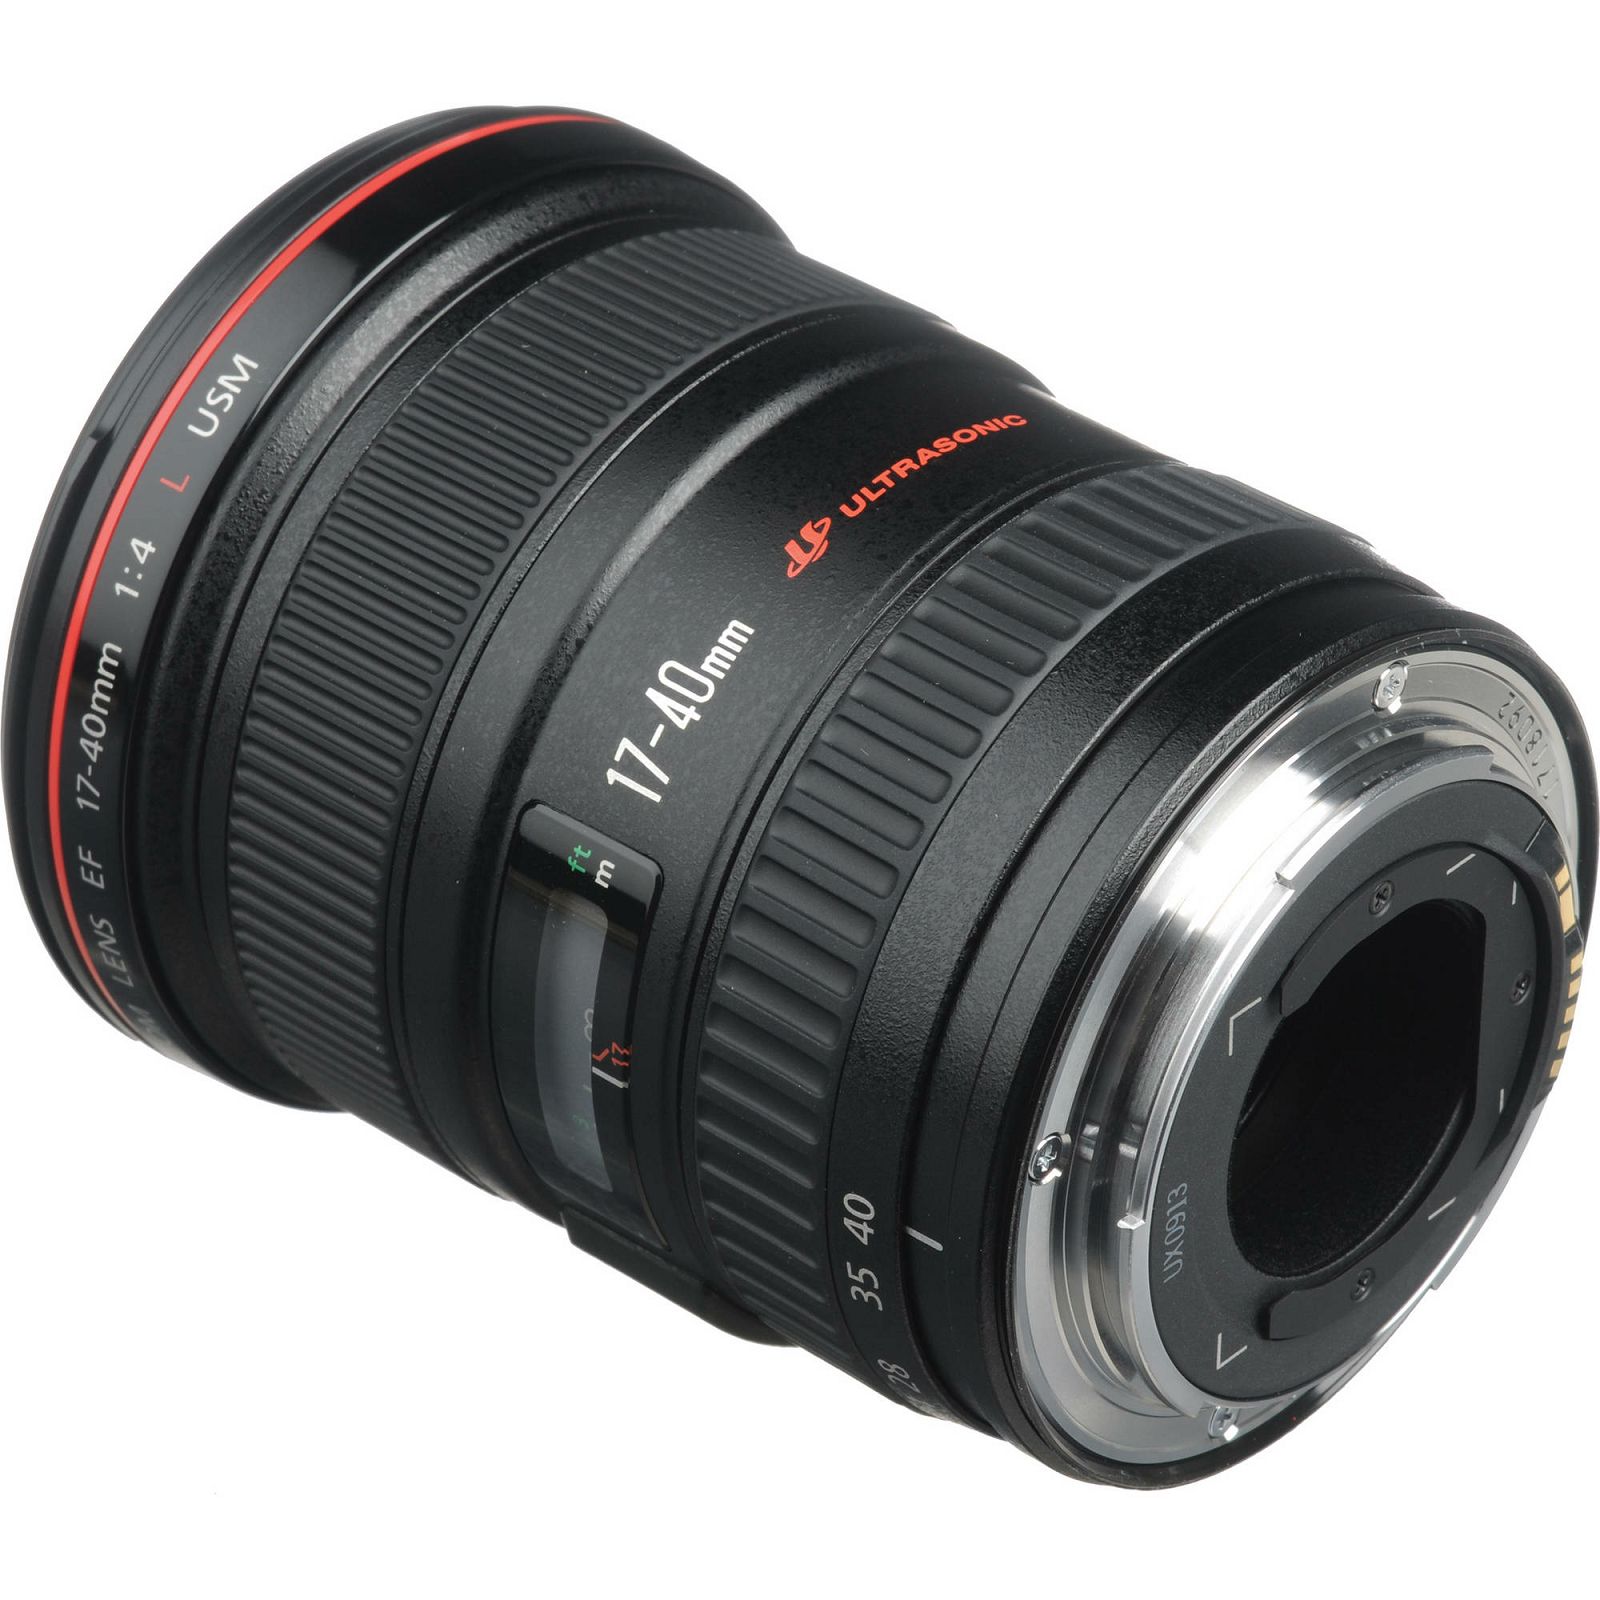 Canon EF 17-40mm f/4 L USM širokokutni objektiv zoom lens 17-40 f/4L F4.0 1:4,0 (8806A007AA)